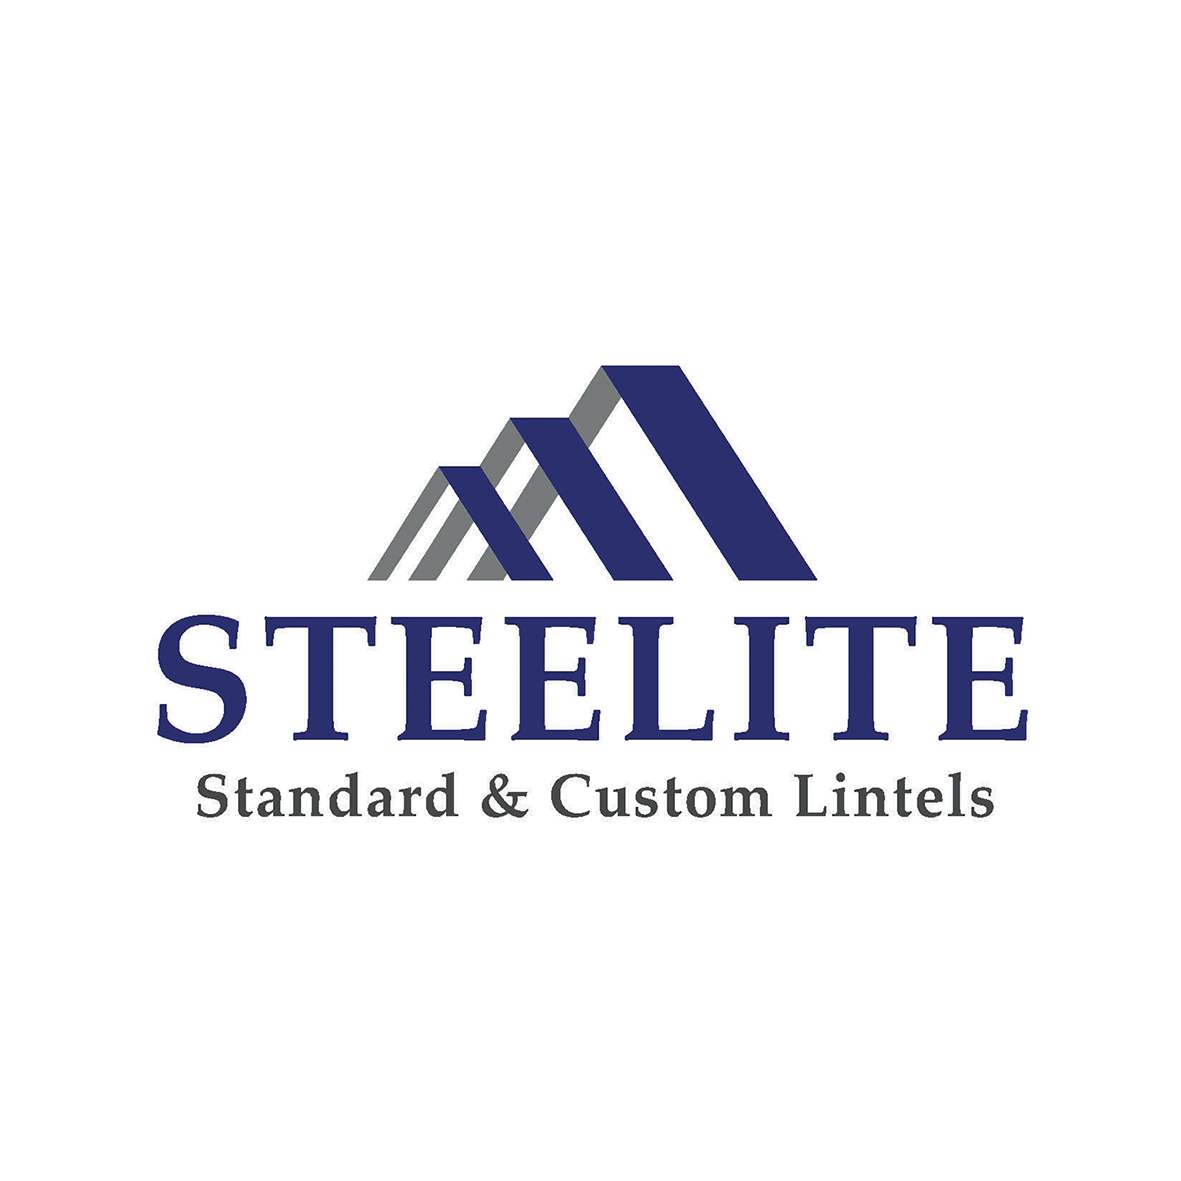 Steelite Specials Company Logo